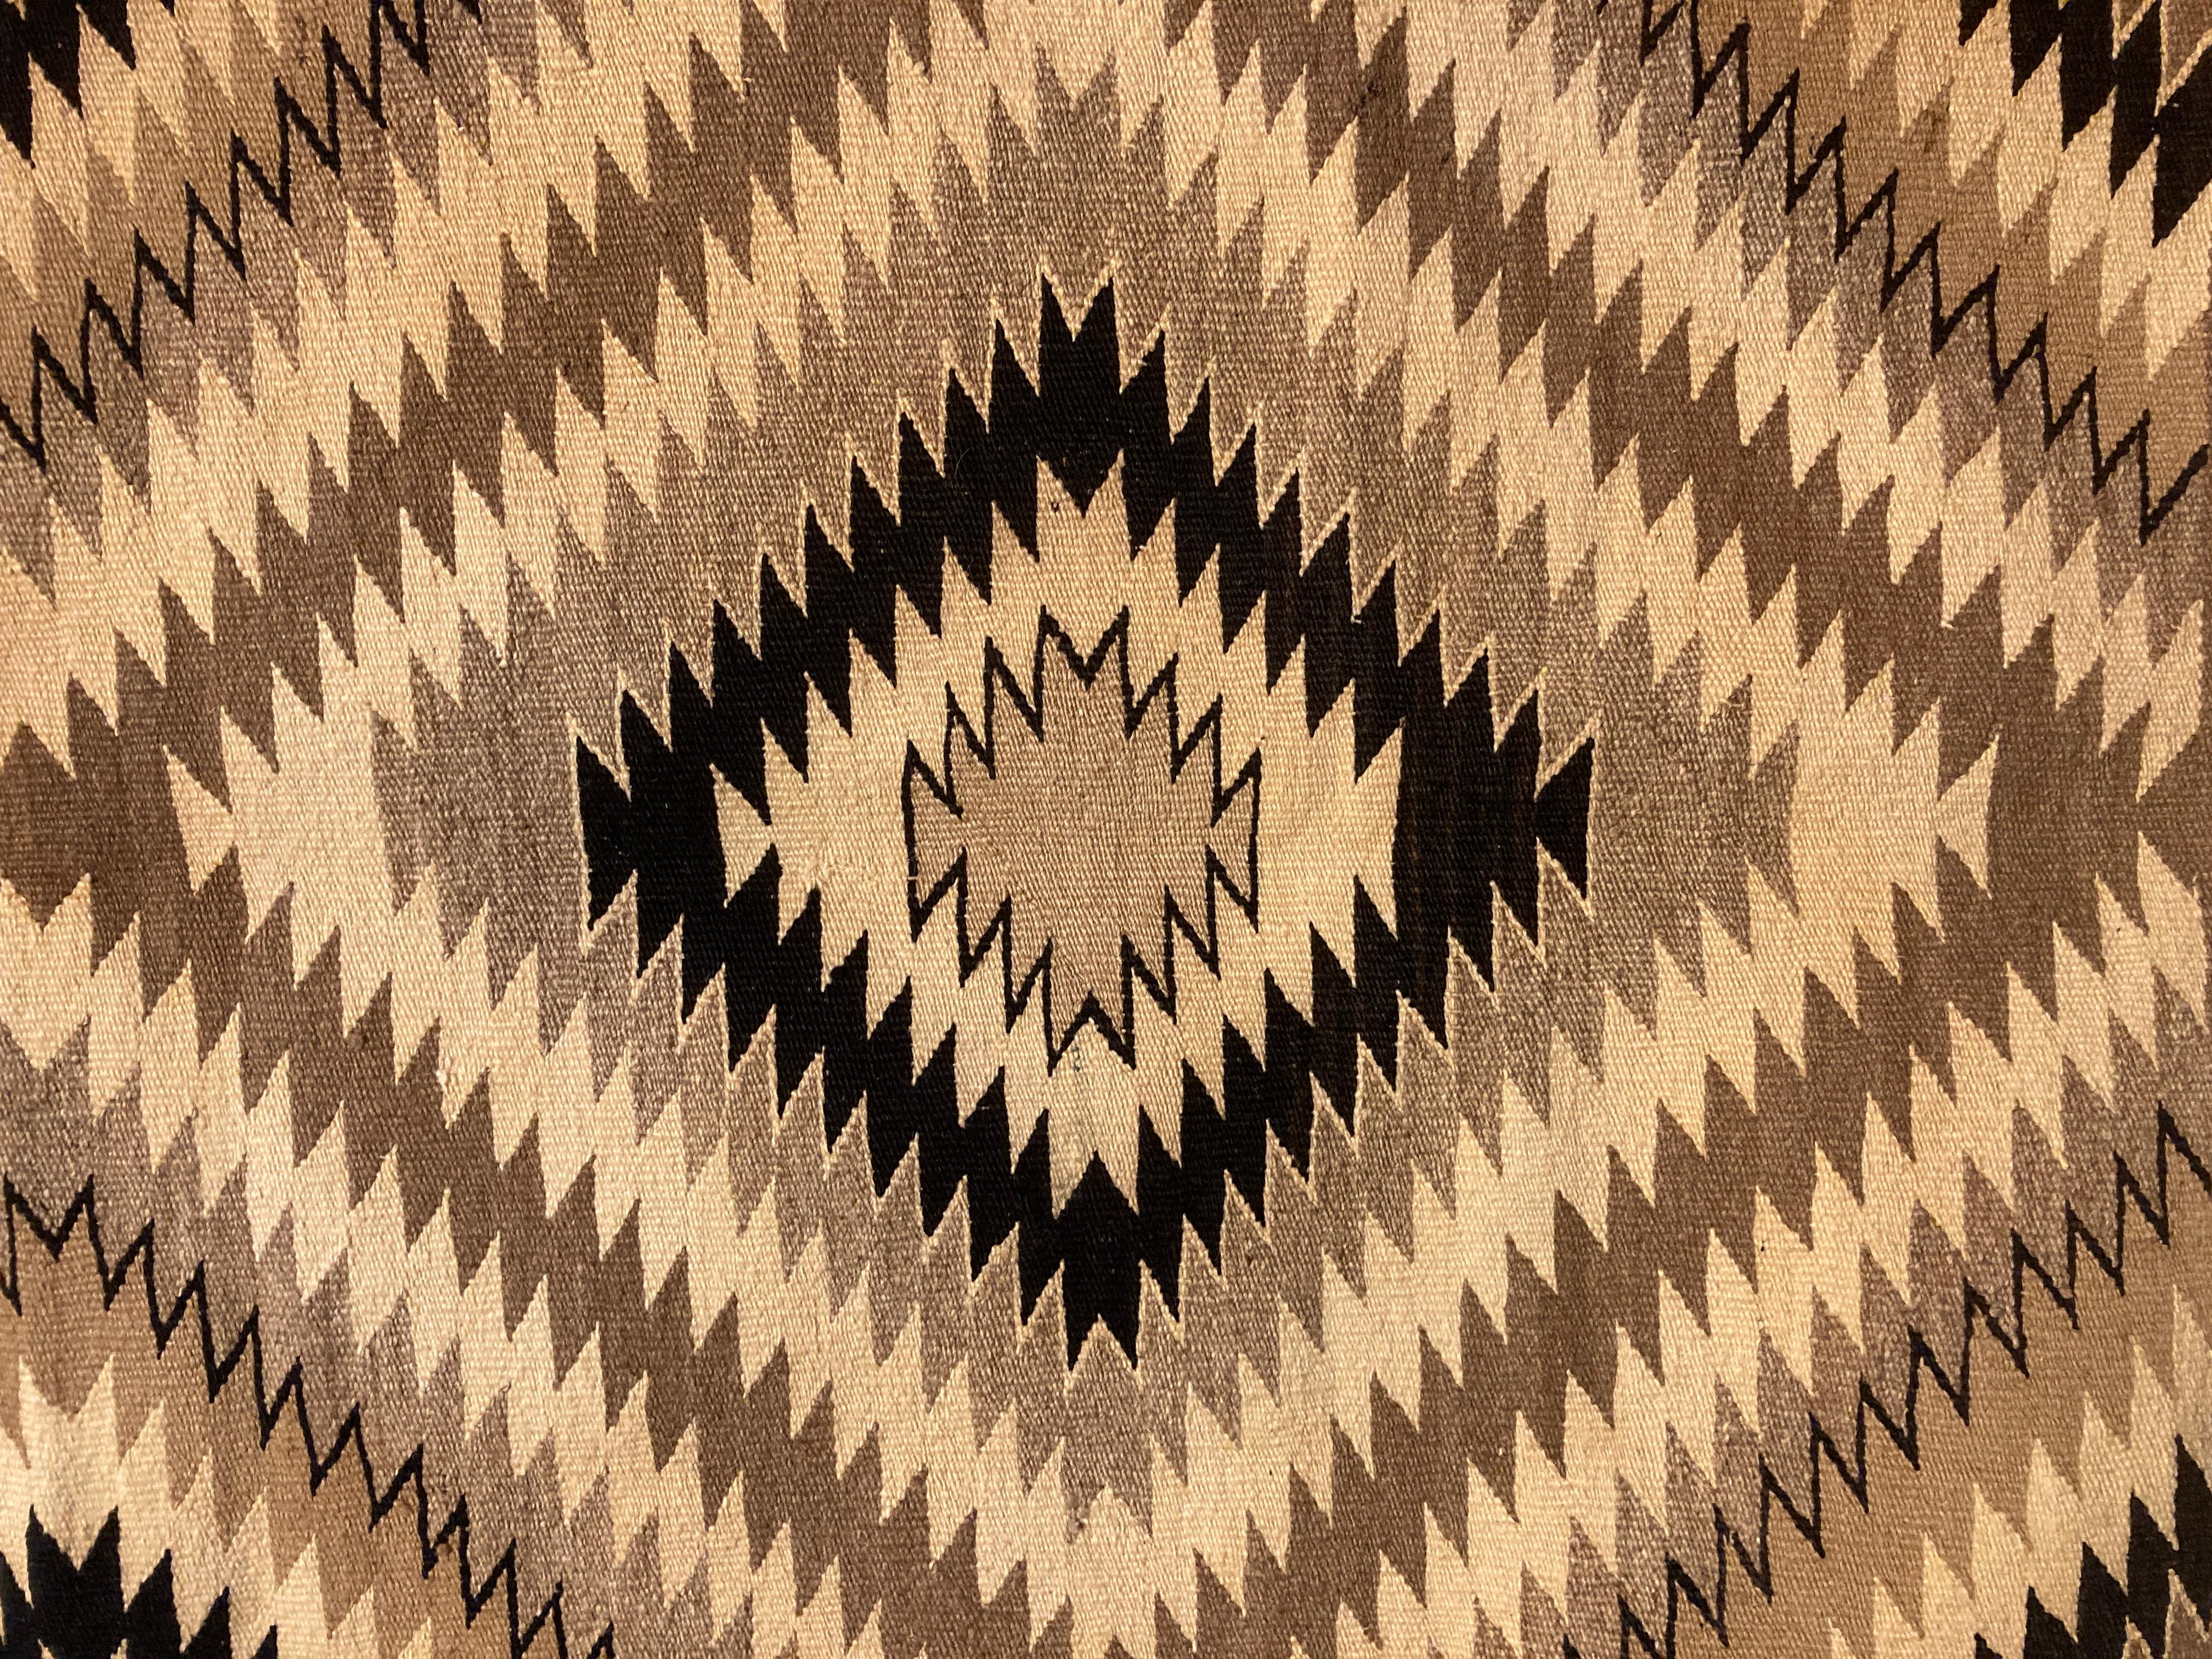 Native American Small Navajo Rug in Earthtone Colors